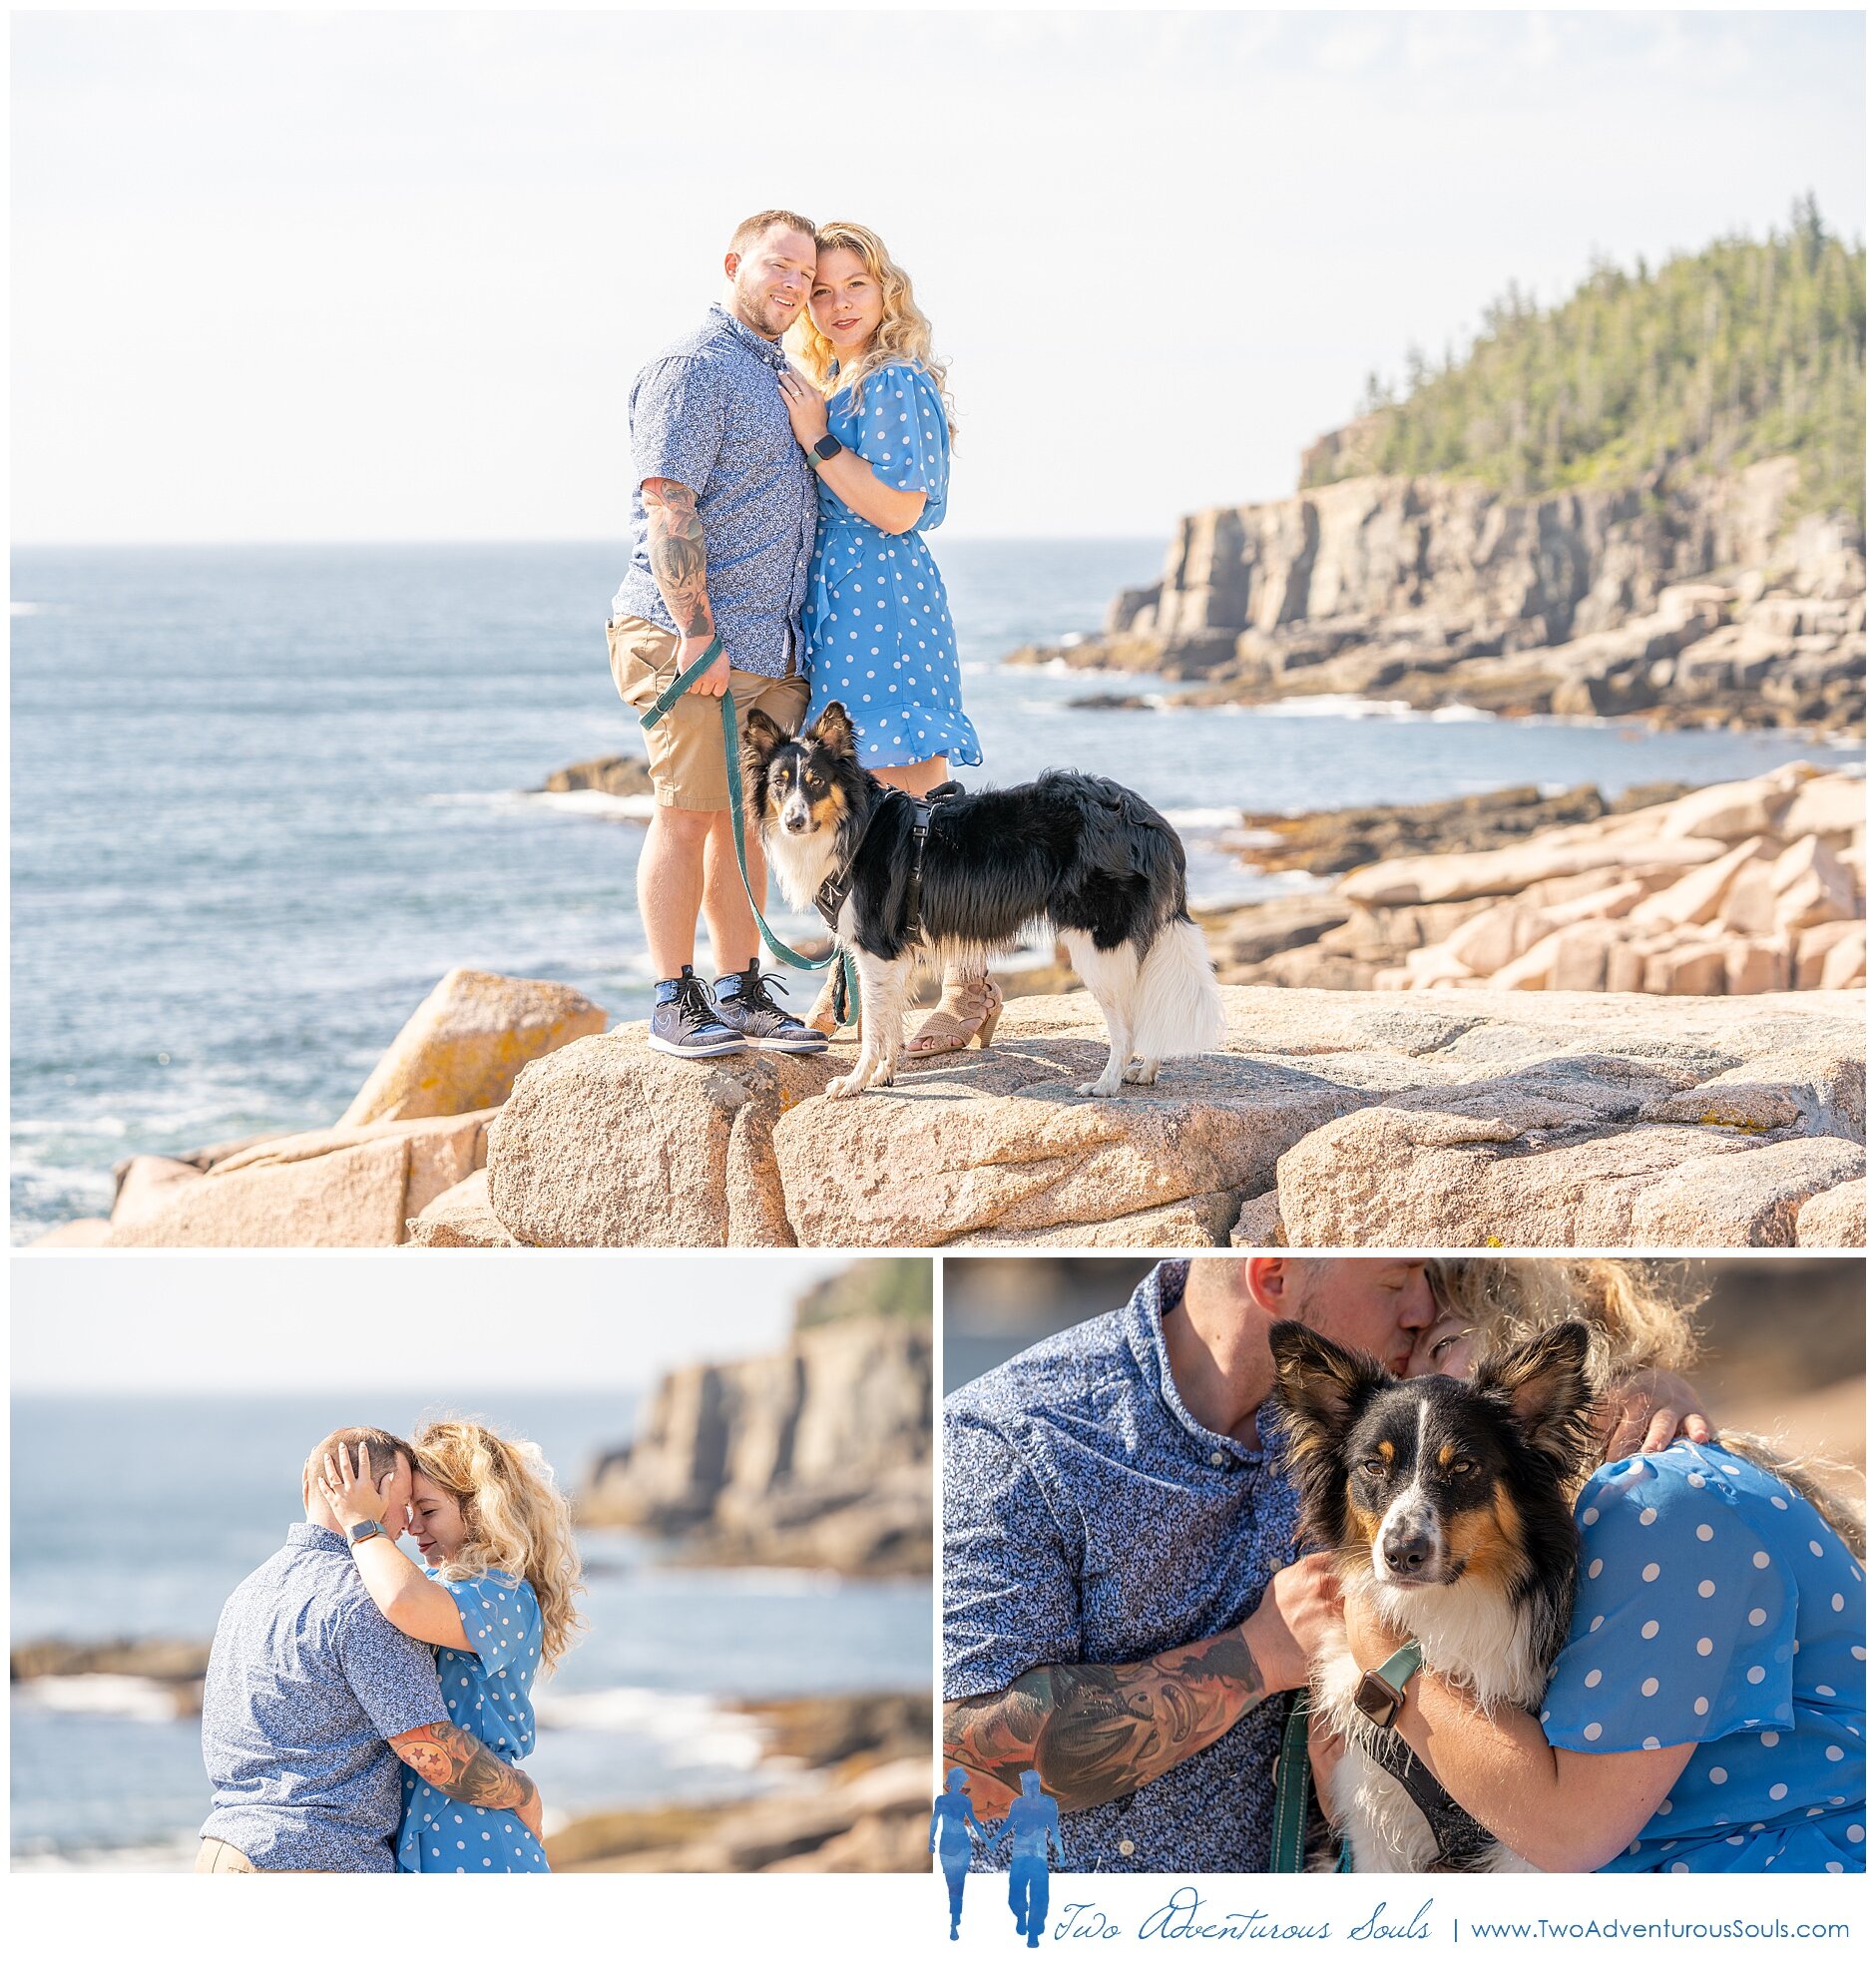 Sunrise Surprise Proposal Acadia National Park Maine, Bar Harbor Maine wedding Photographers, Two Adventurous Souls - 061421_0024.jpg